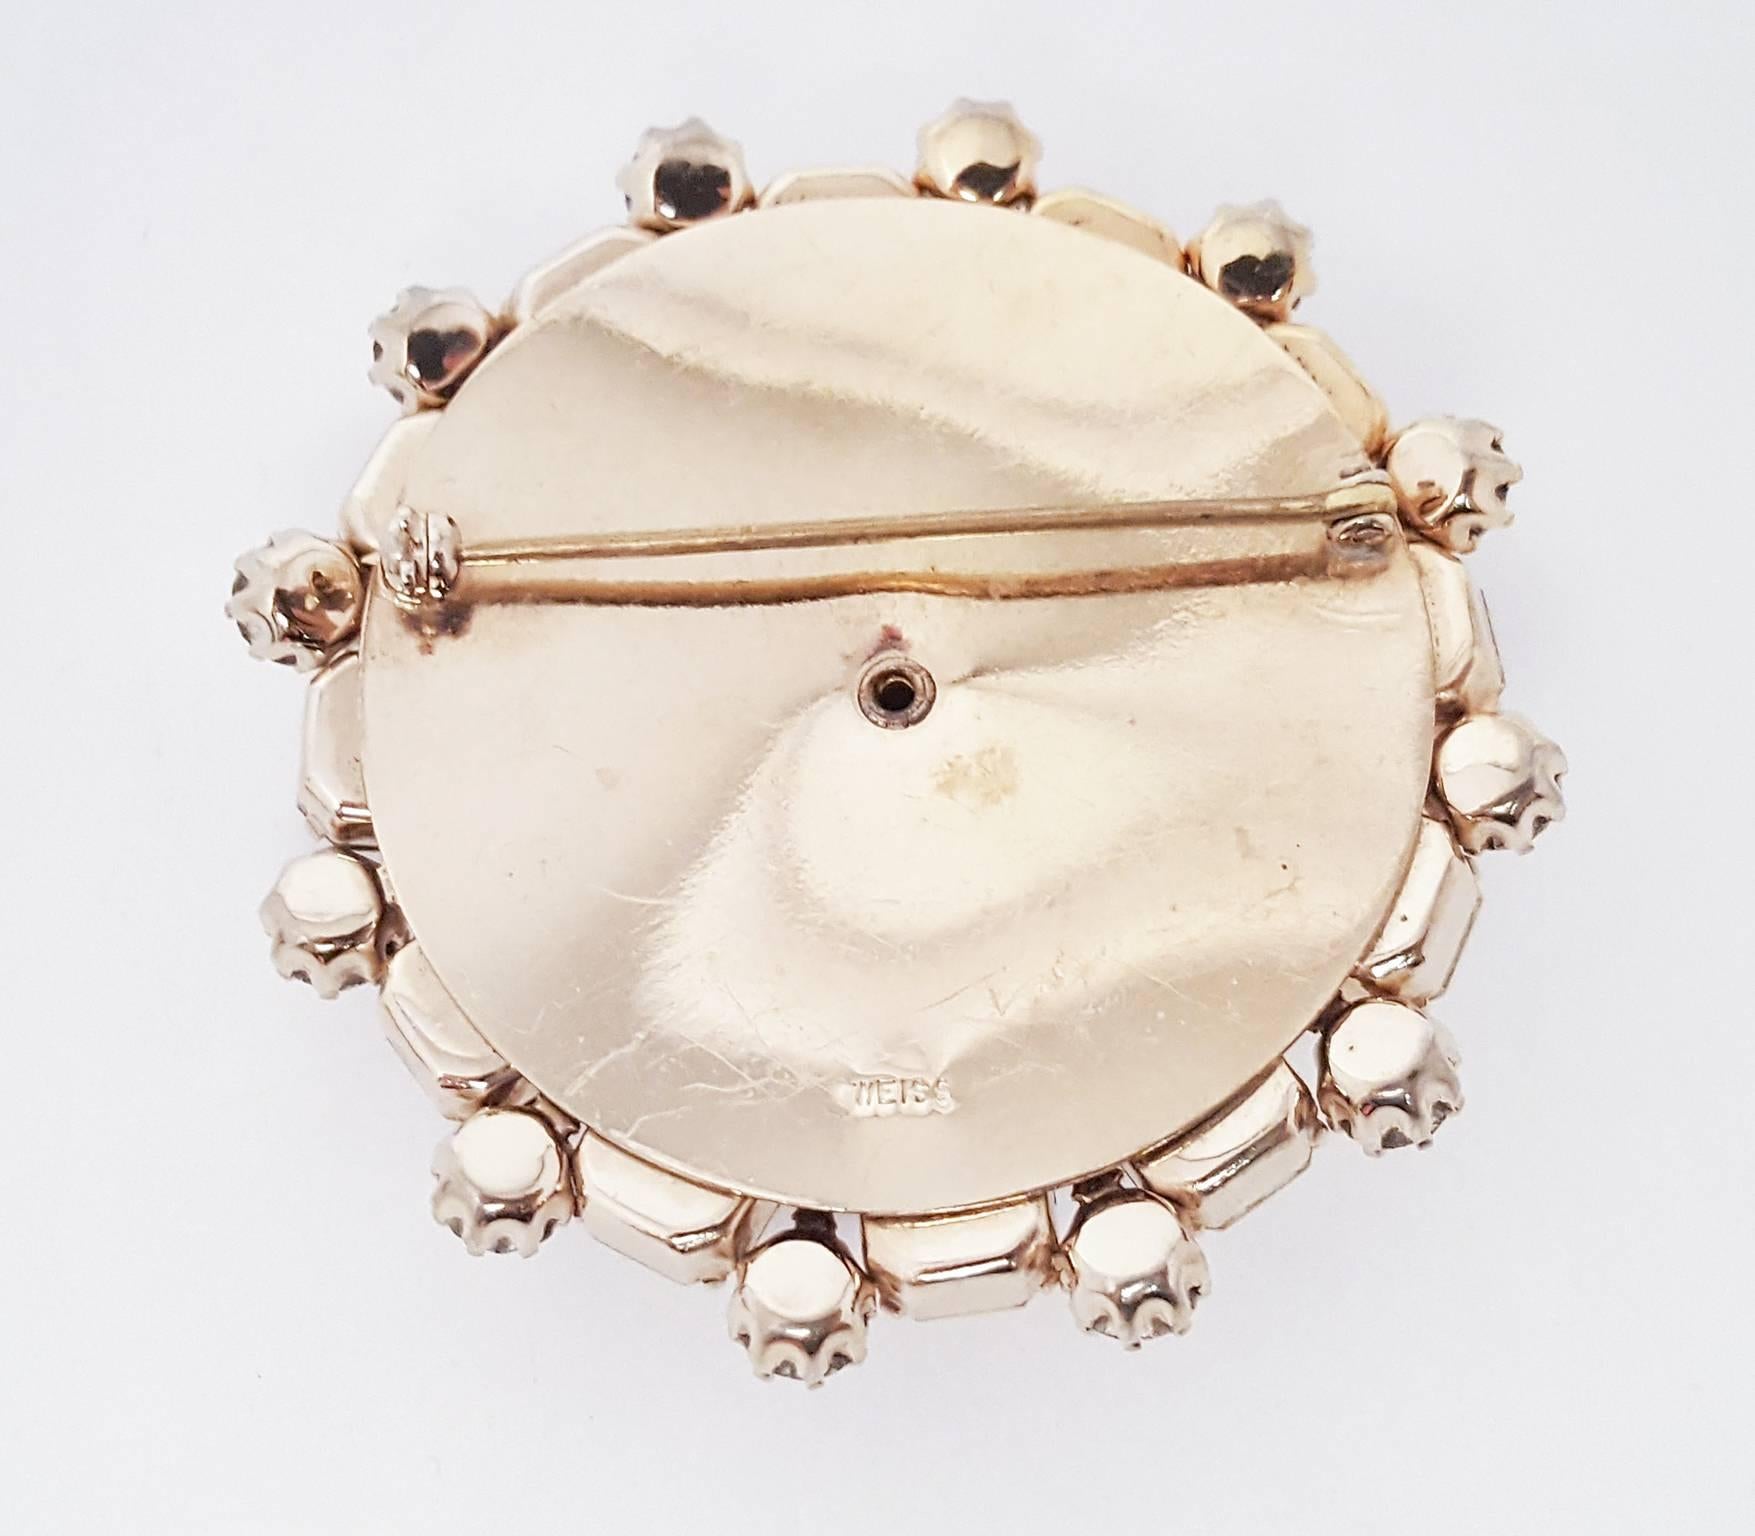 1950s Aurora Borealis Crystal Weiss Brooch and Earrings Set. Signed brooch. Clip-on earrings.

Brooch: 2 1/4